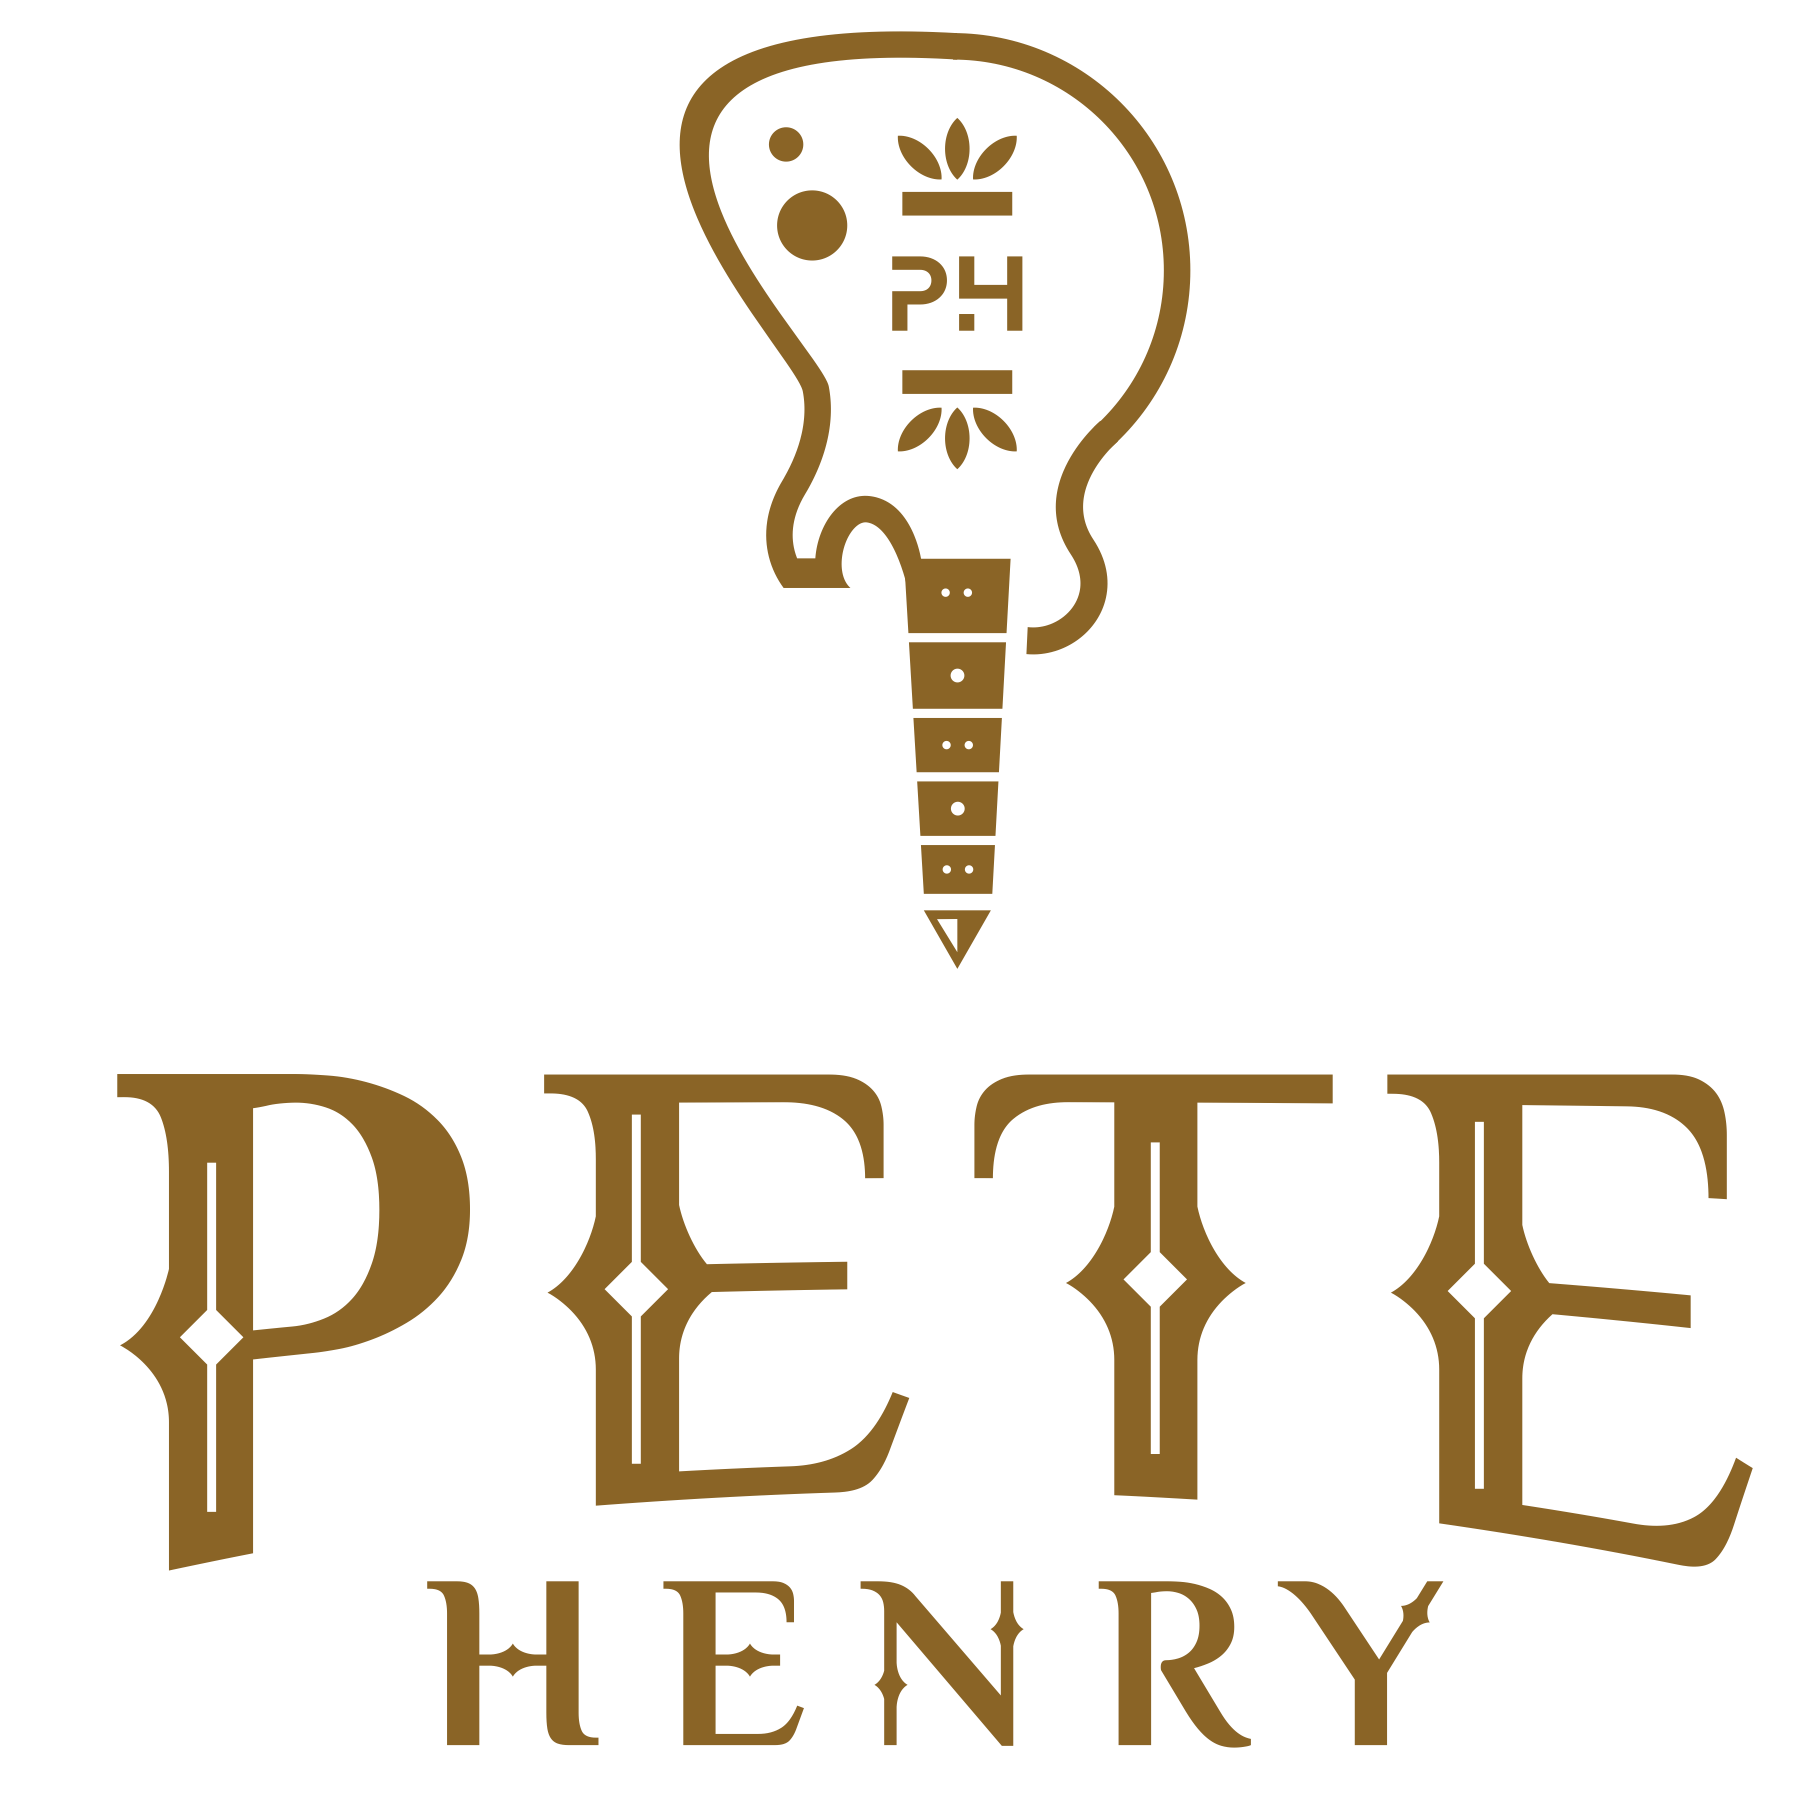 Pete Henry